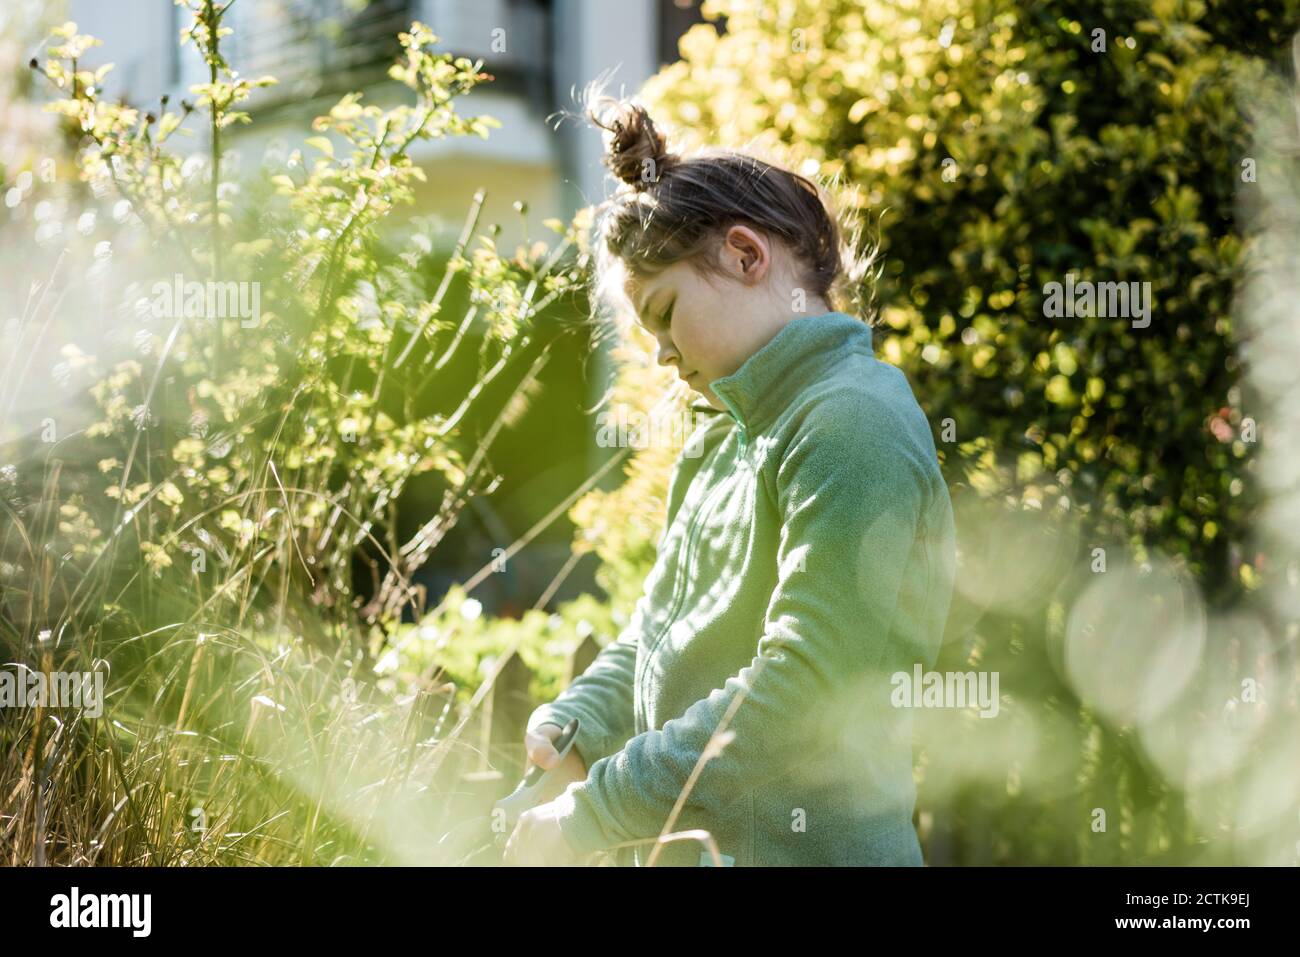 Girl with hand tool gardening in yard Stock Photo